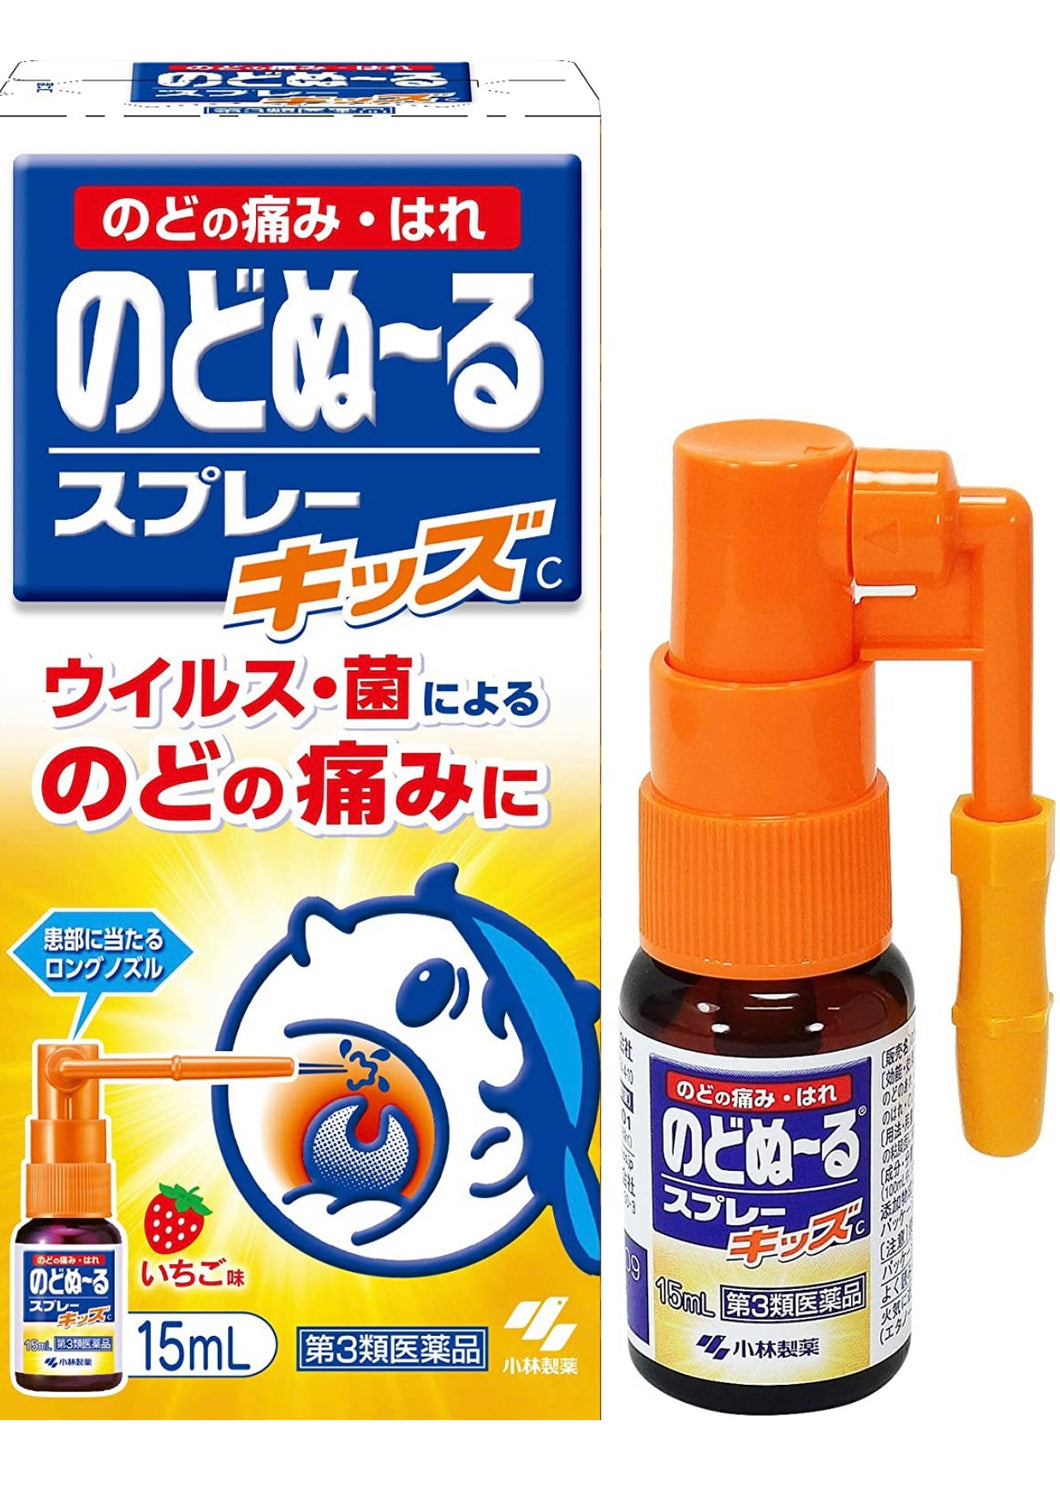 Kobayashi Sore Throat Spray For Kid 15ml